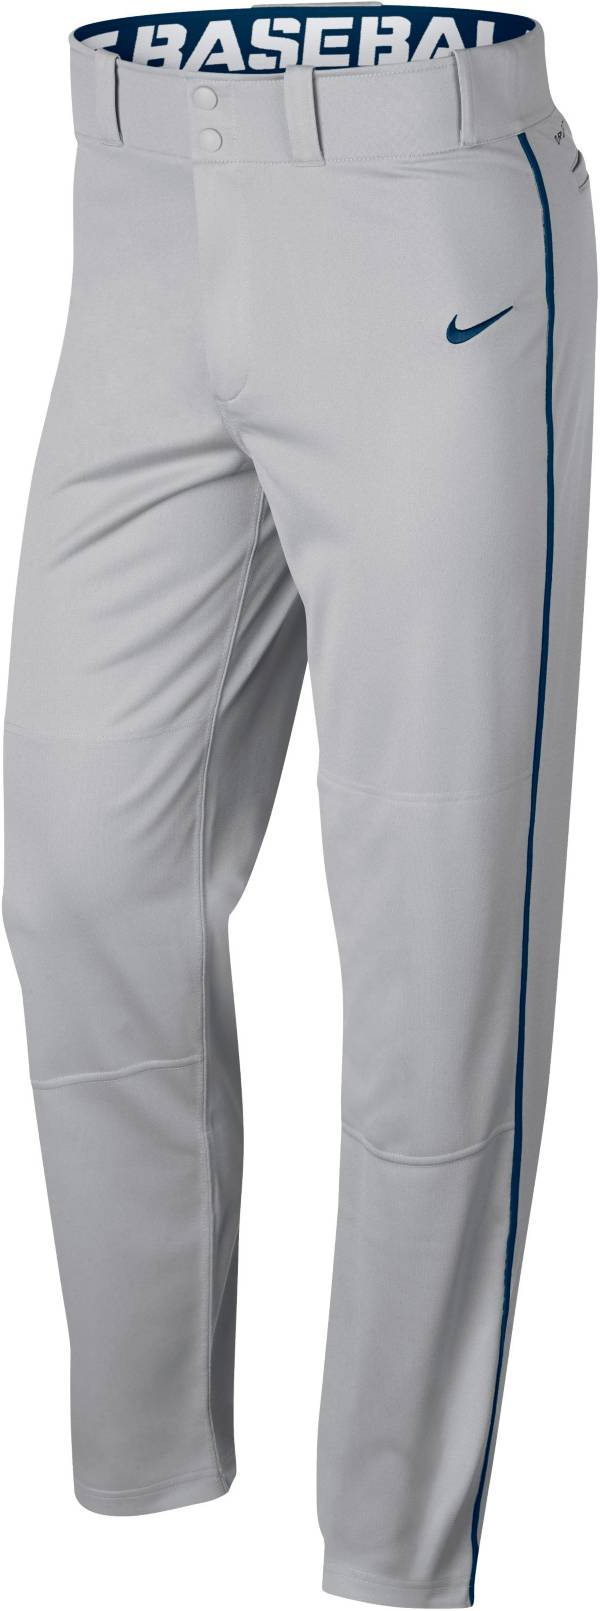 industria Dólar peor Nike Men's Swoosh Piped Dri-FIT Baseball Pants | Dick's Sporting Goods